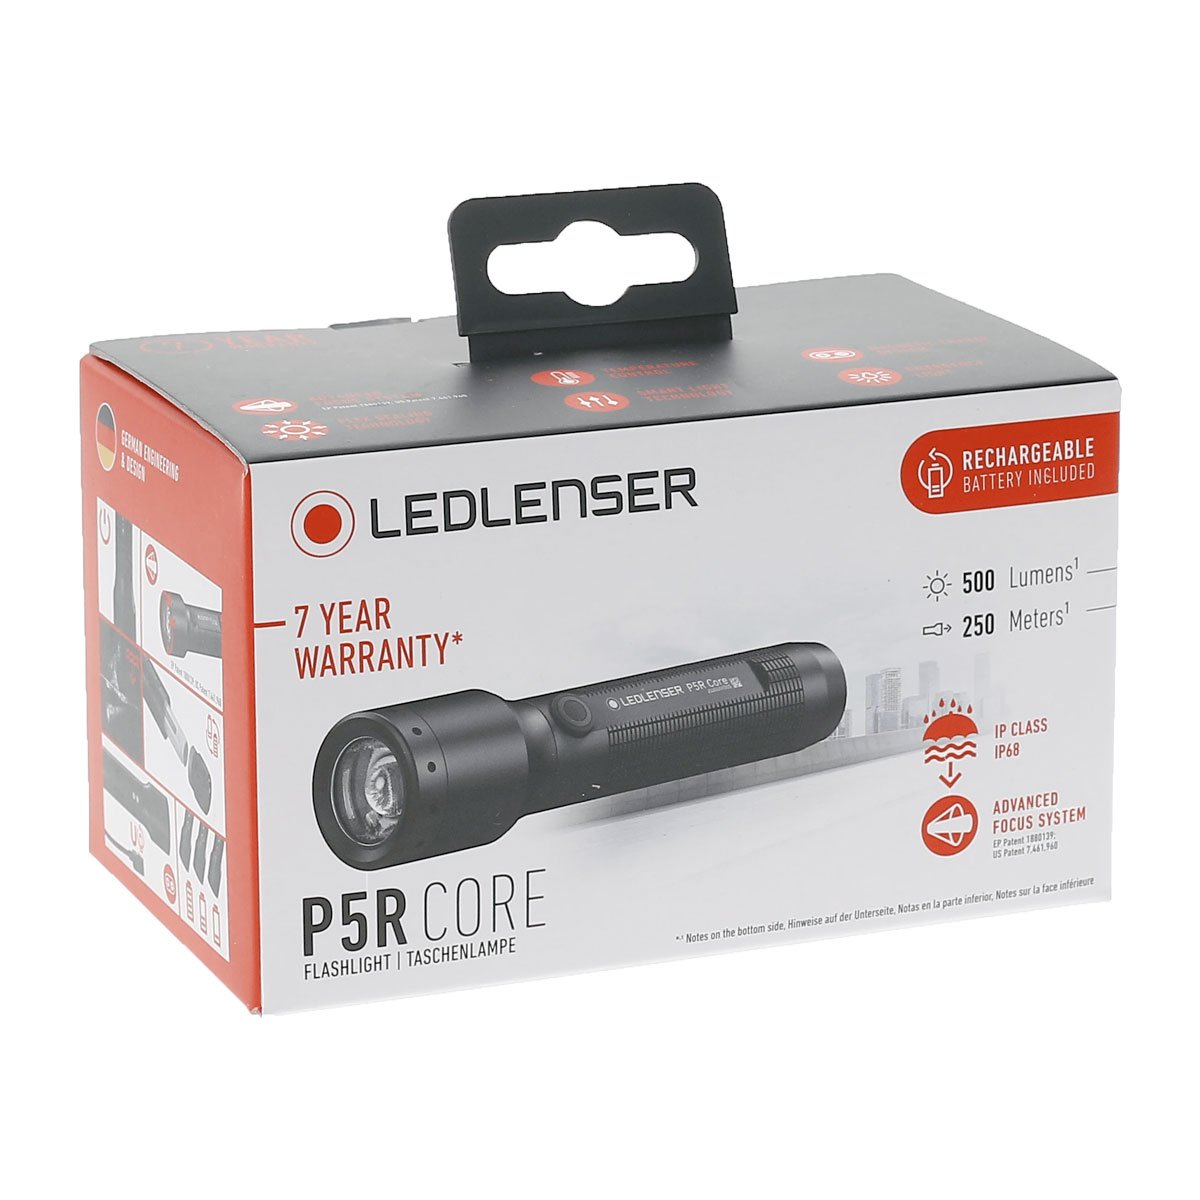 Ledlenser P5R Core 500 Lumens Rechargeable Flashlight Flashlights and Lighting Ledlenser Tactical Gear Supplier Tactical Distributors Australia